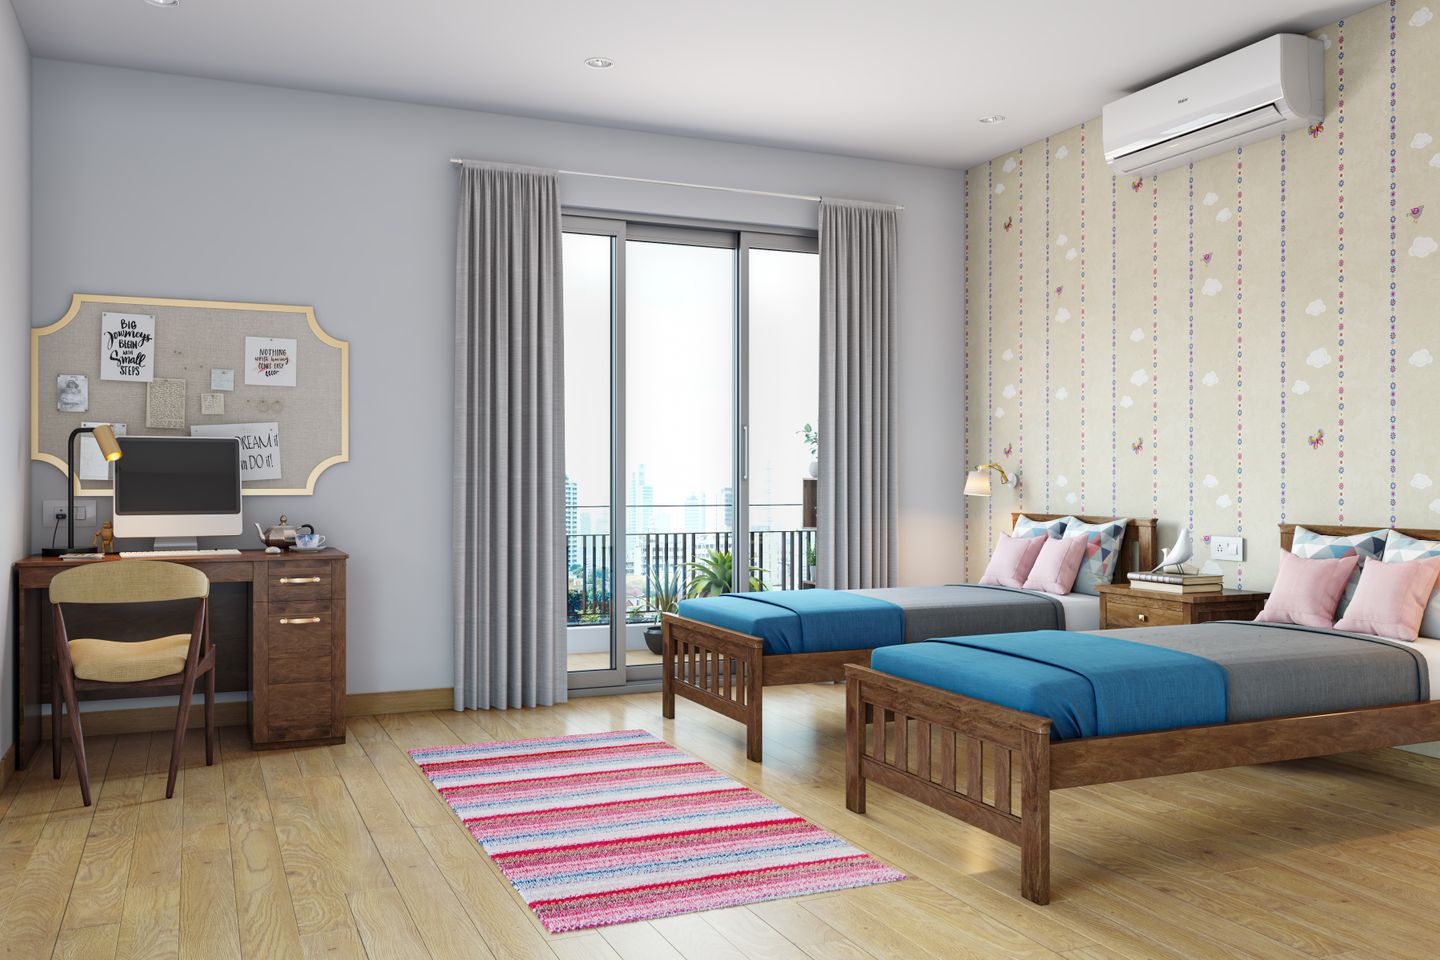 Kids Bedroom Design With Modern Spacious Interiors - Livspace